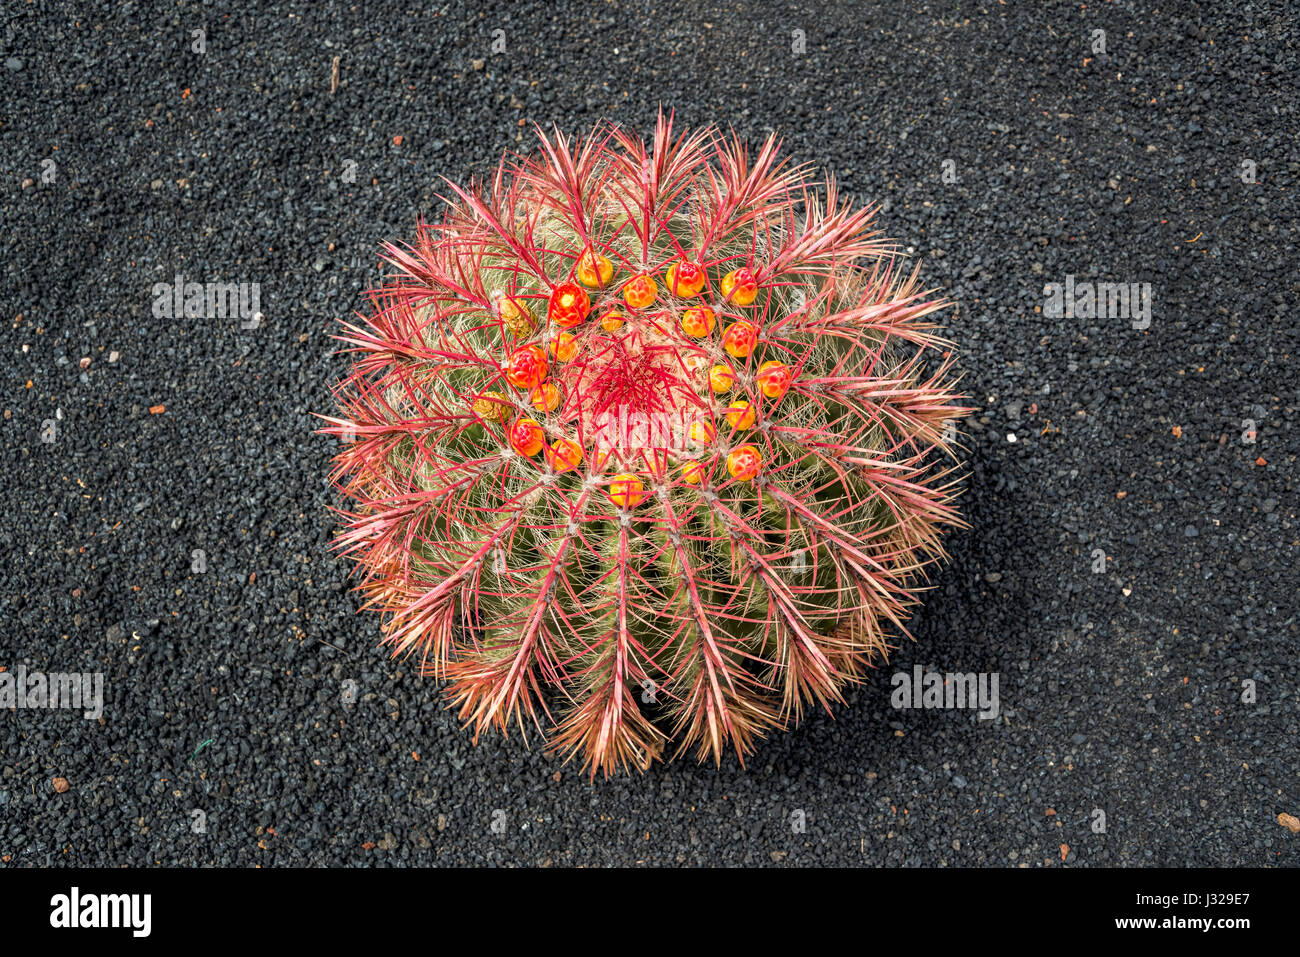 Arizona barrel cactus (Ferocactus wislizeni) with orange flowers, black lava soil background in Lanzarote Stock Photo